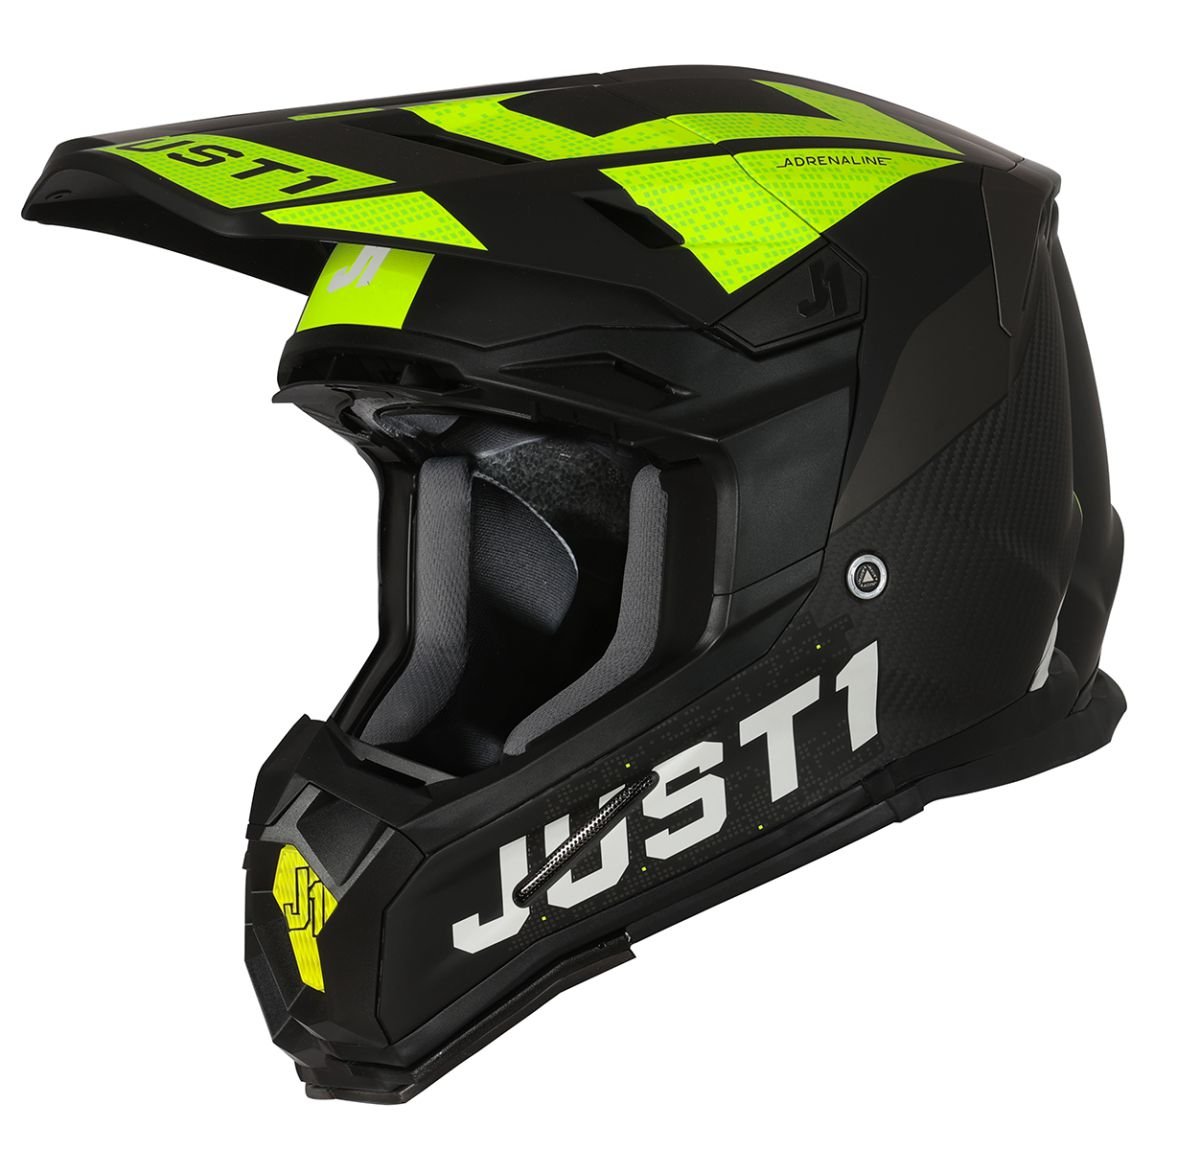 Image of Just1 Helmet J-22 Adrenaline Schwarz Gelb Fluo Carbon Matt Crosshelm Größe XS